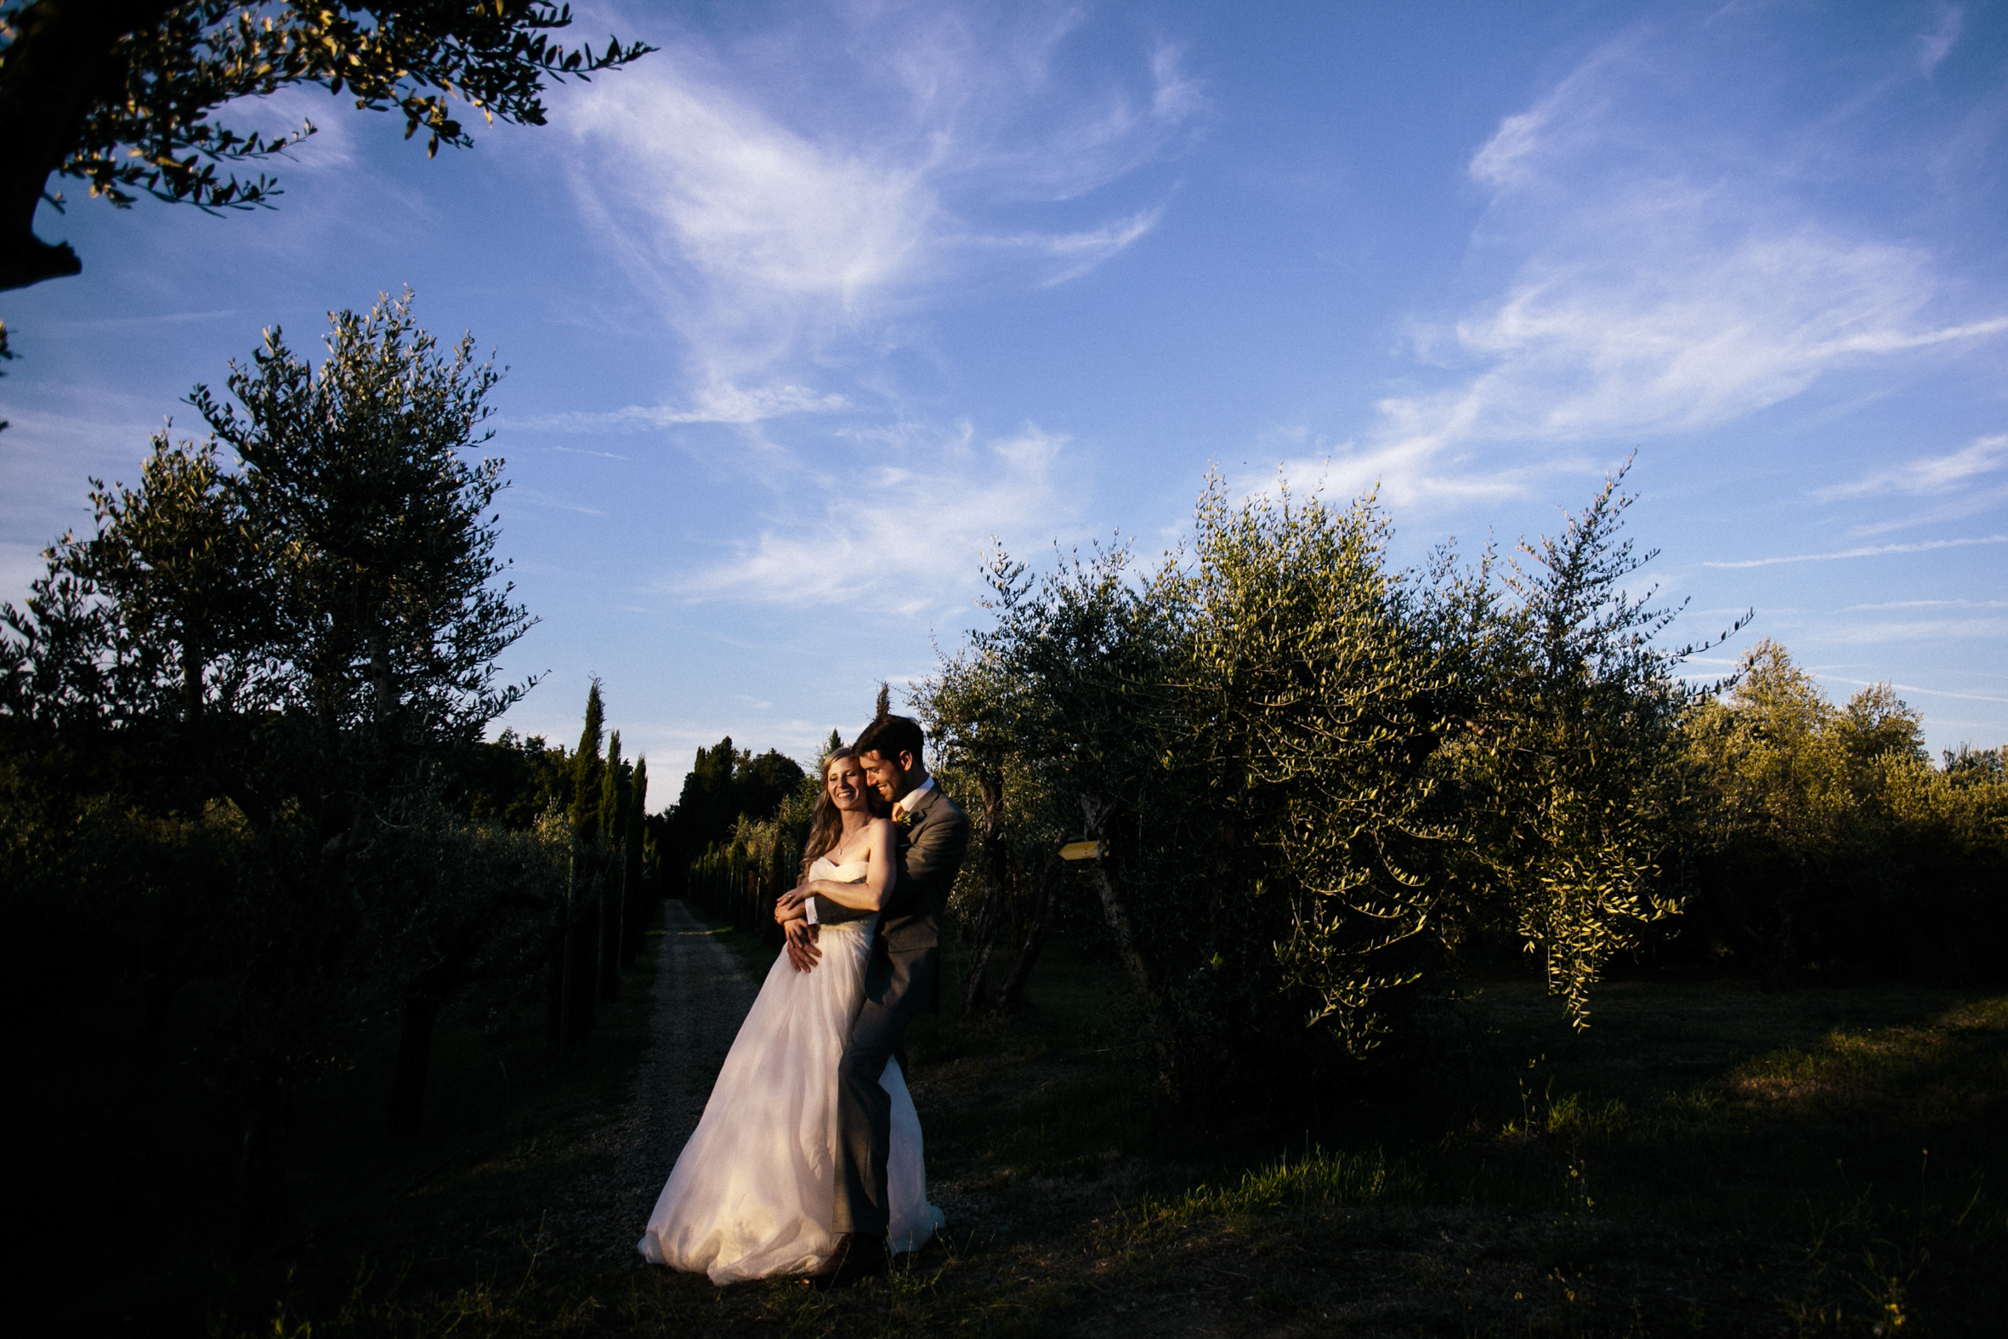  Destination Wedding in Italy.
Liguria.
Zoagli, Portofino, Santa Margherita Ligure.
Wedding Photographer Julian Kanz. 